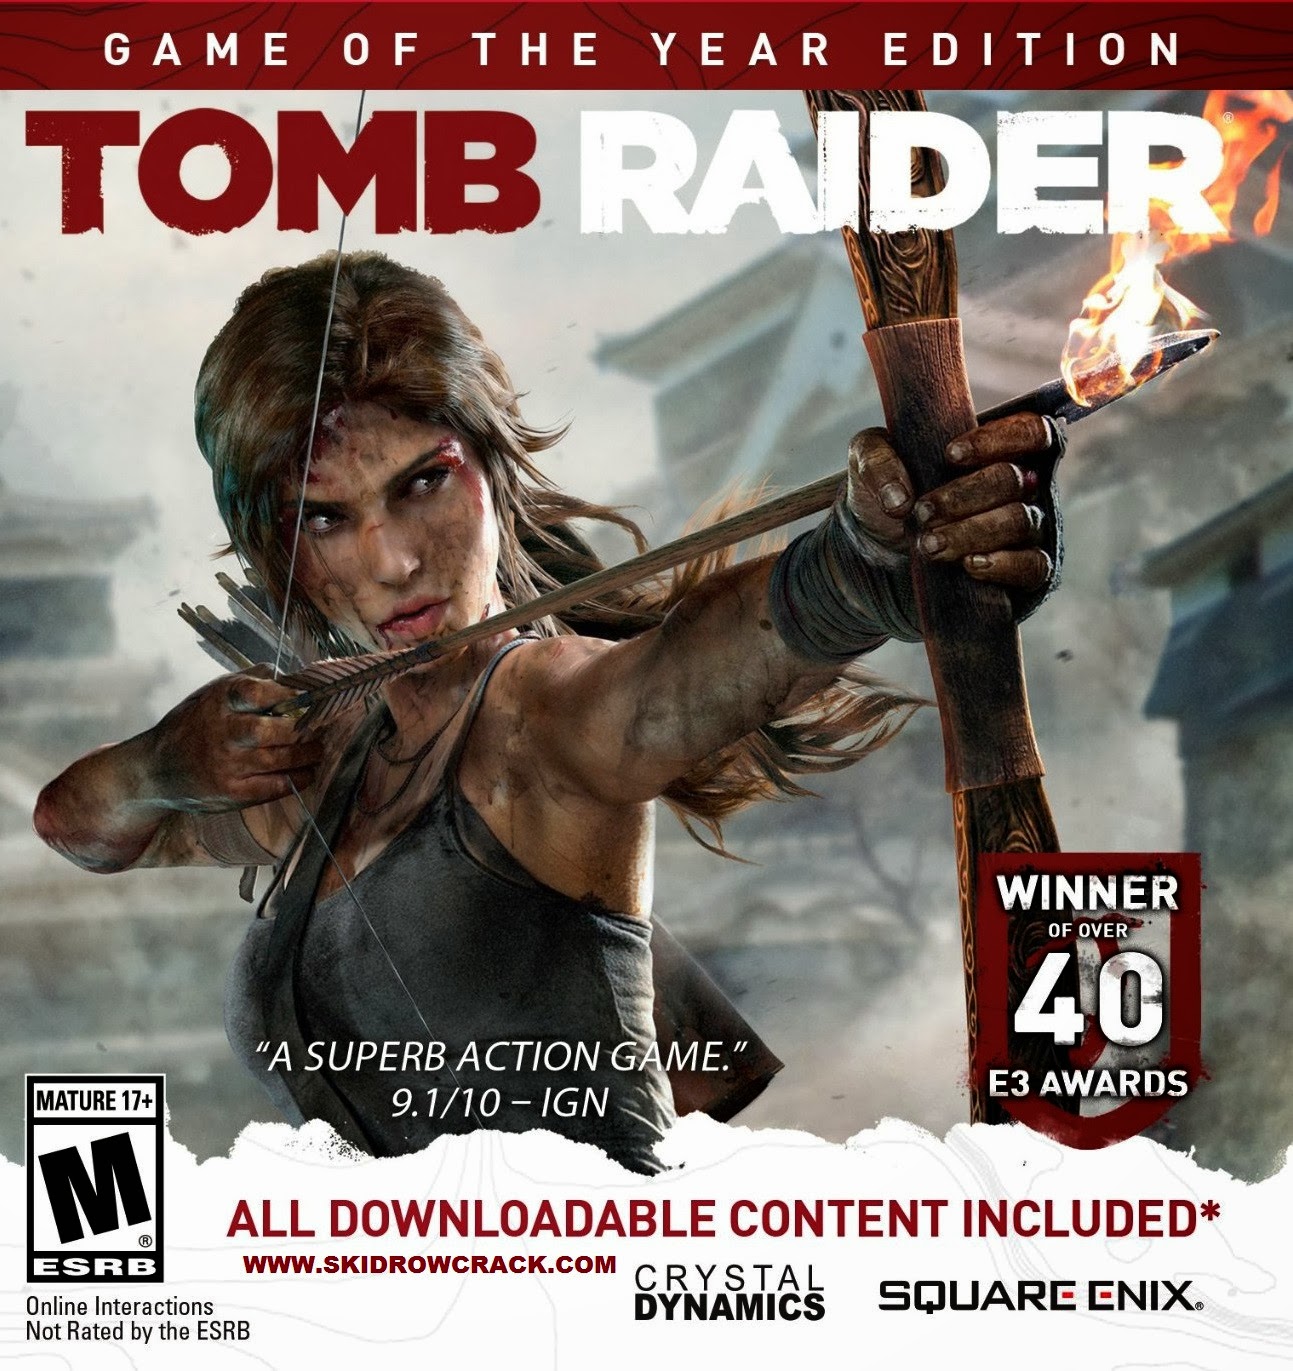 Tomb Raider Free Download Full Game